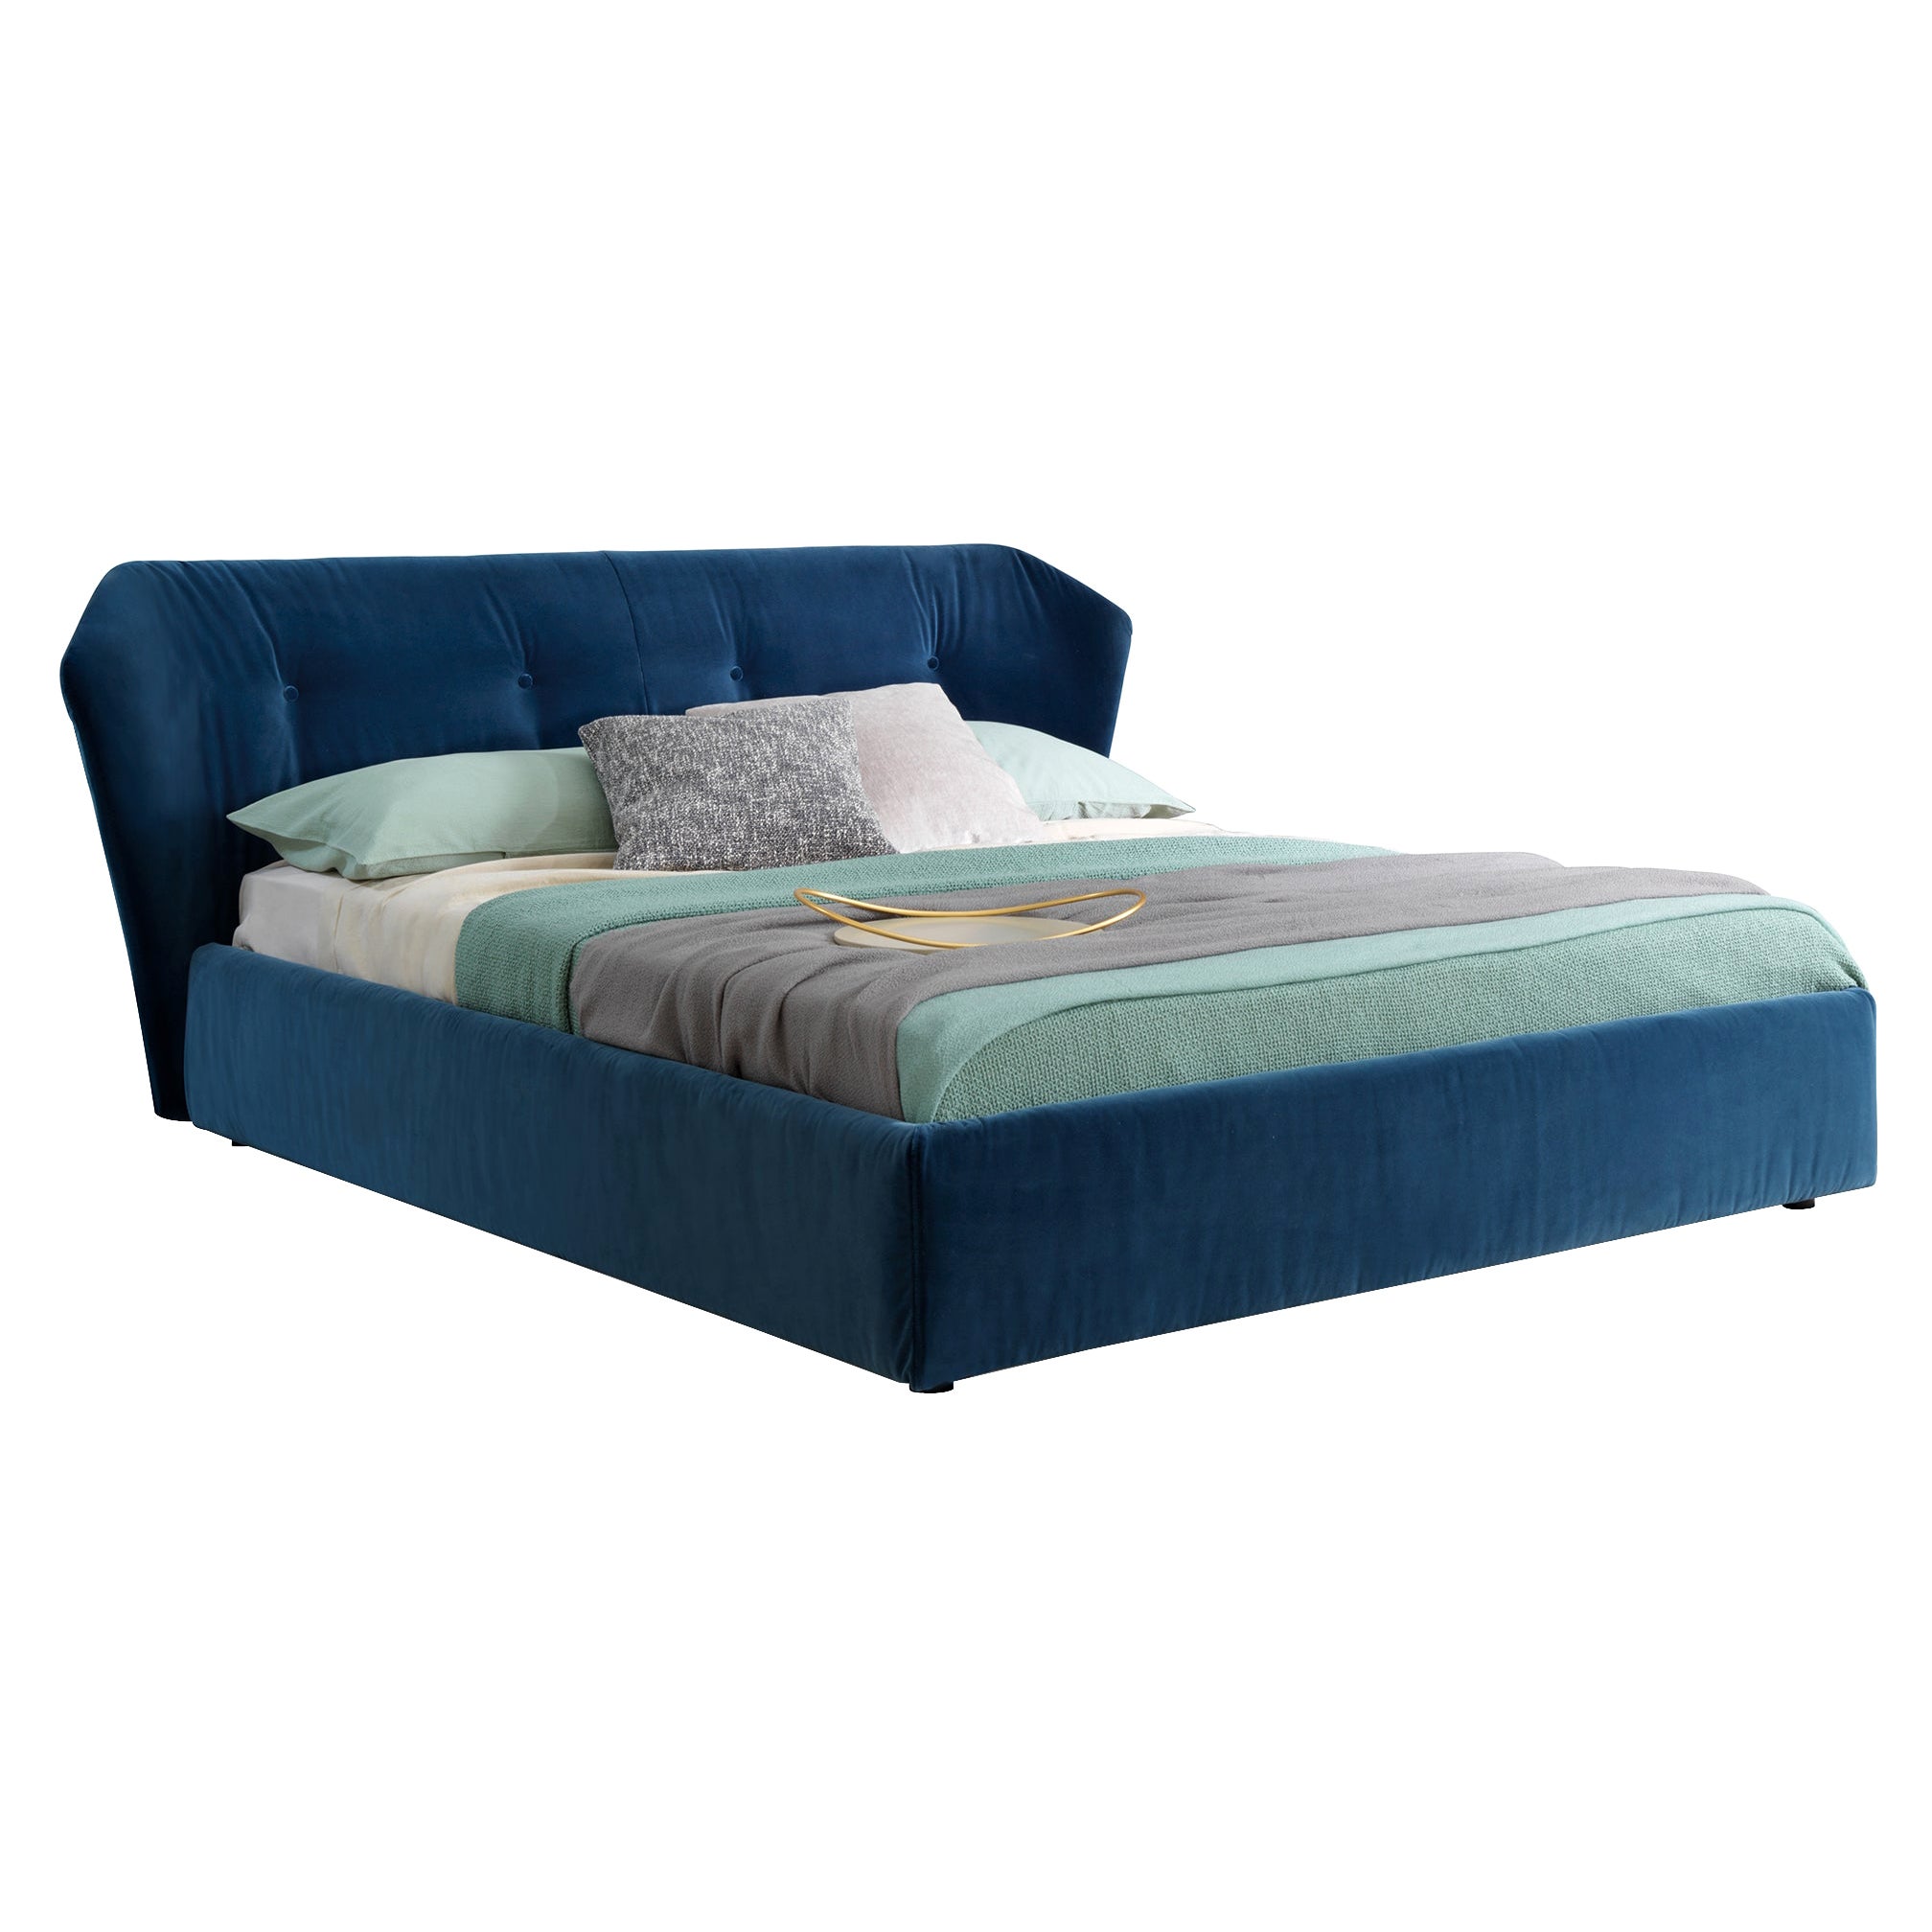 New York Box Bed Large in Vegas Velvet Dark Blue Upholstery by Sergio Bicego For Sale